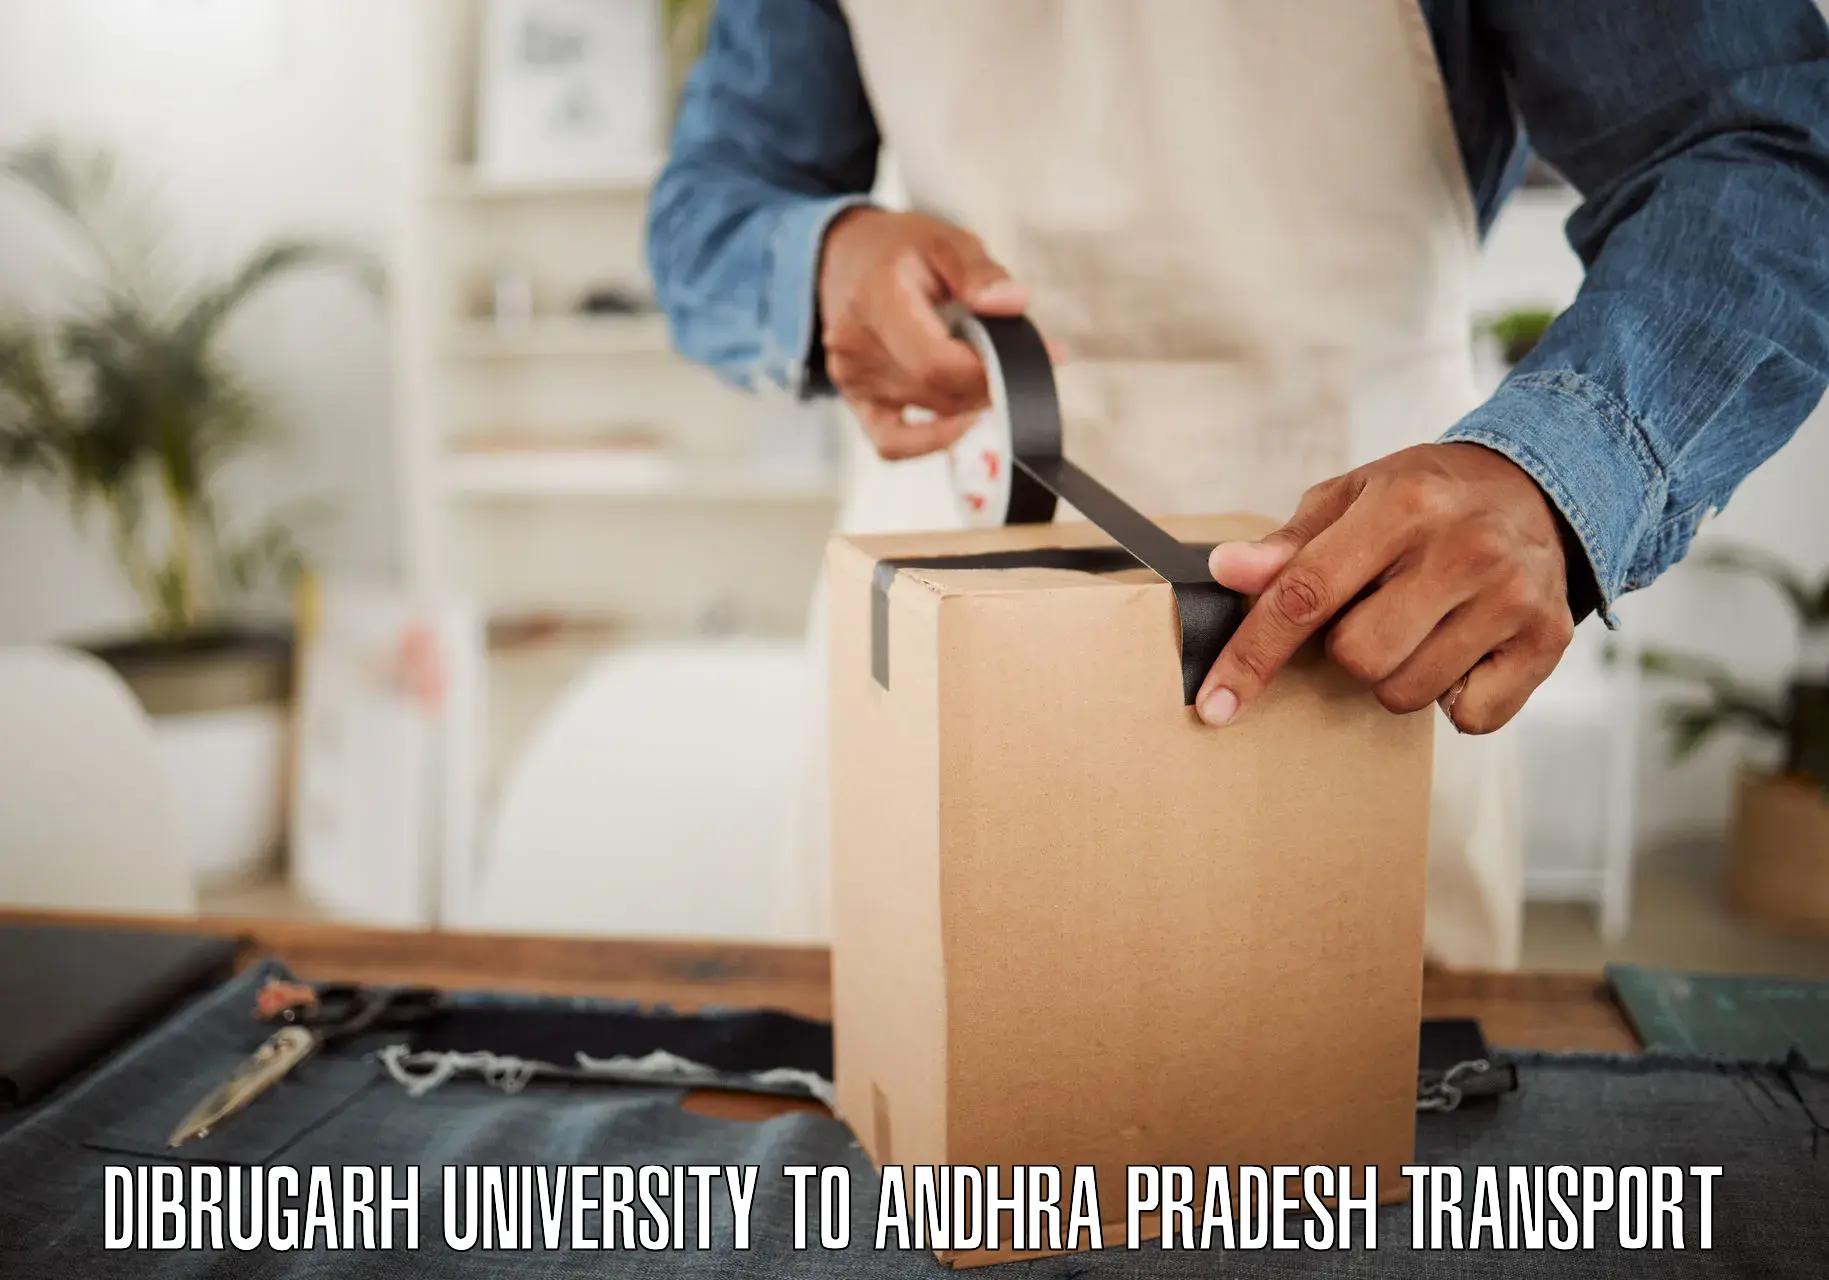 Furniture transport service Dibrugarh University to Pakala